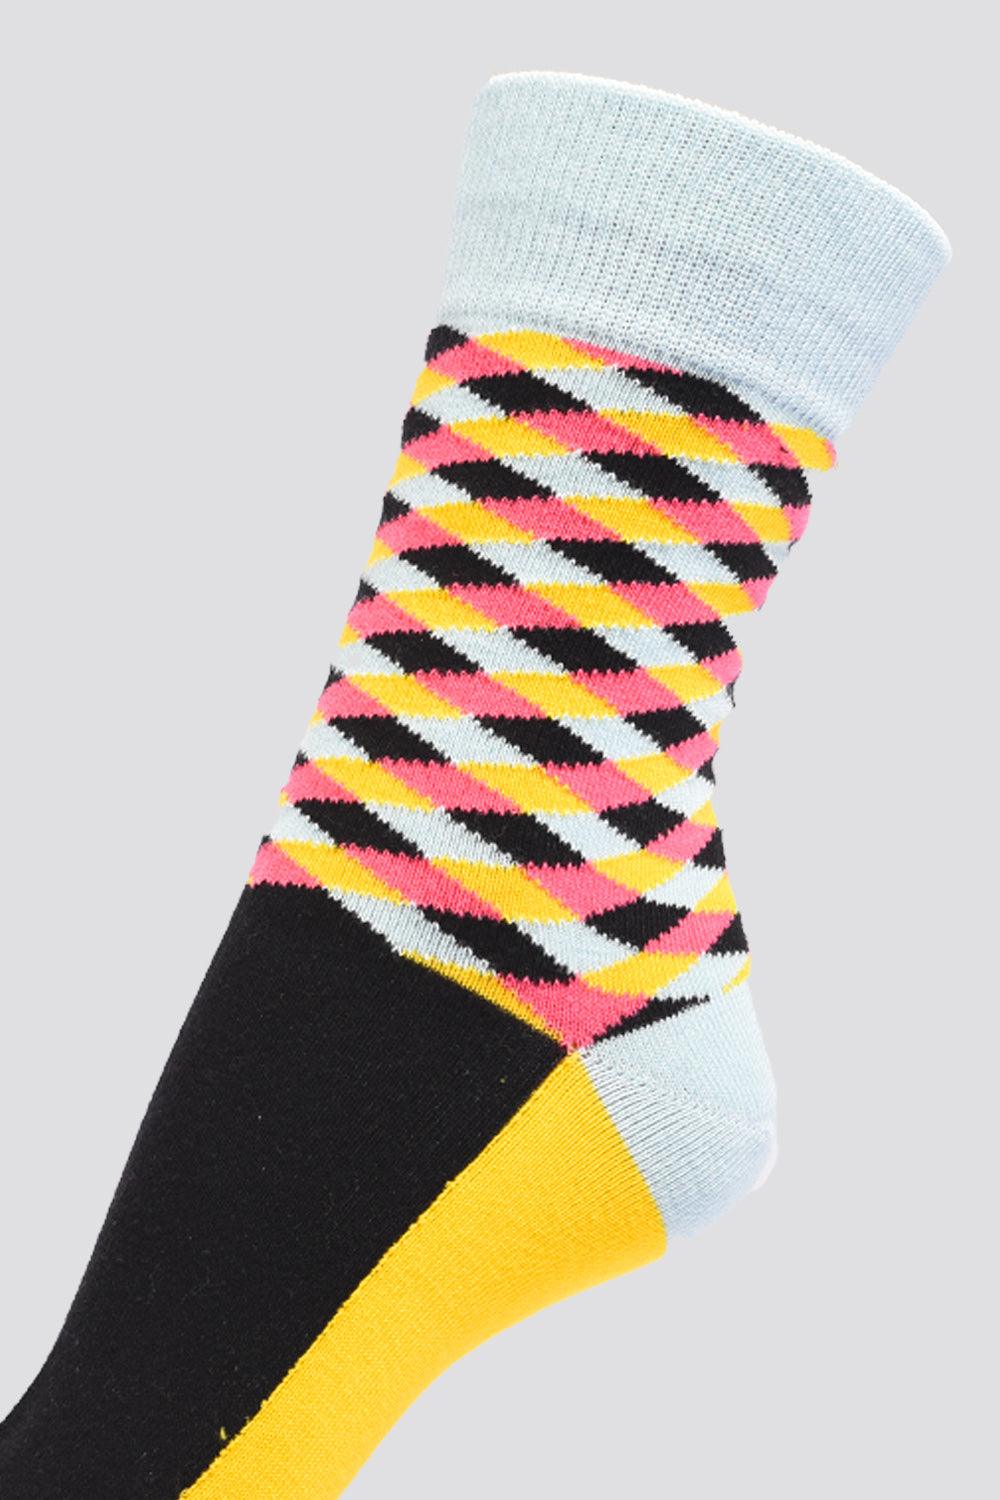 SIMPLE O.D.S - זוג גרביים צבעונים 41-45 - MASHBIR//365